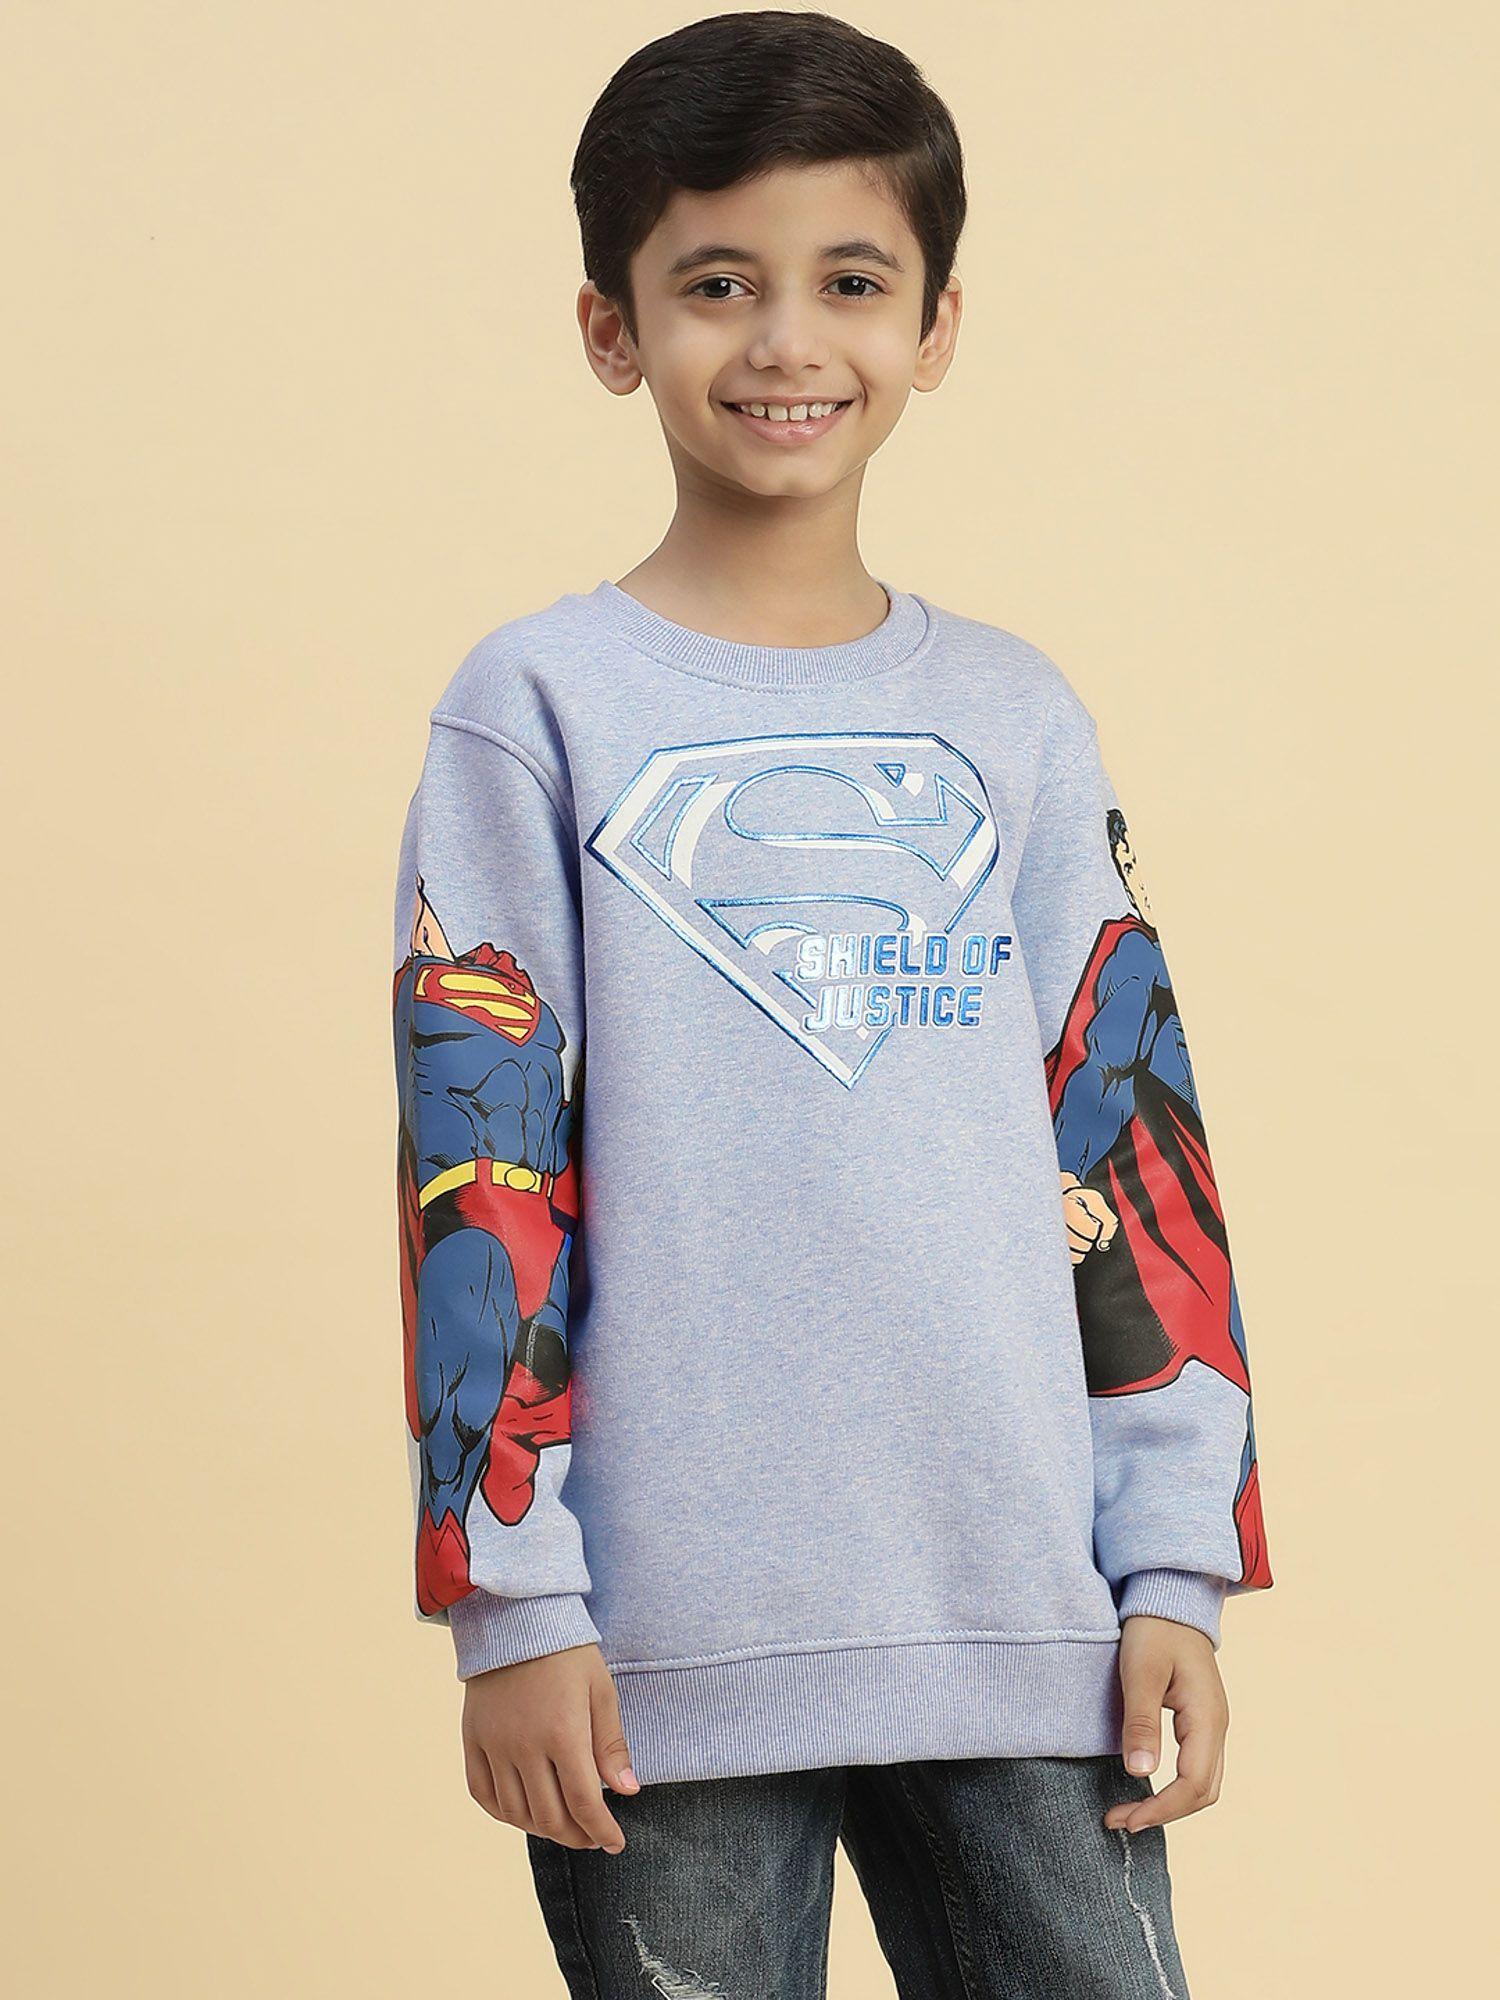 superman printed blue sweatshirt for boys